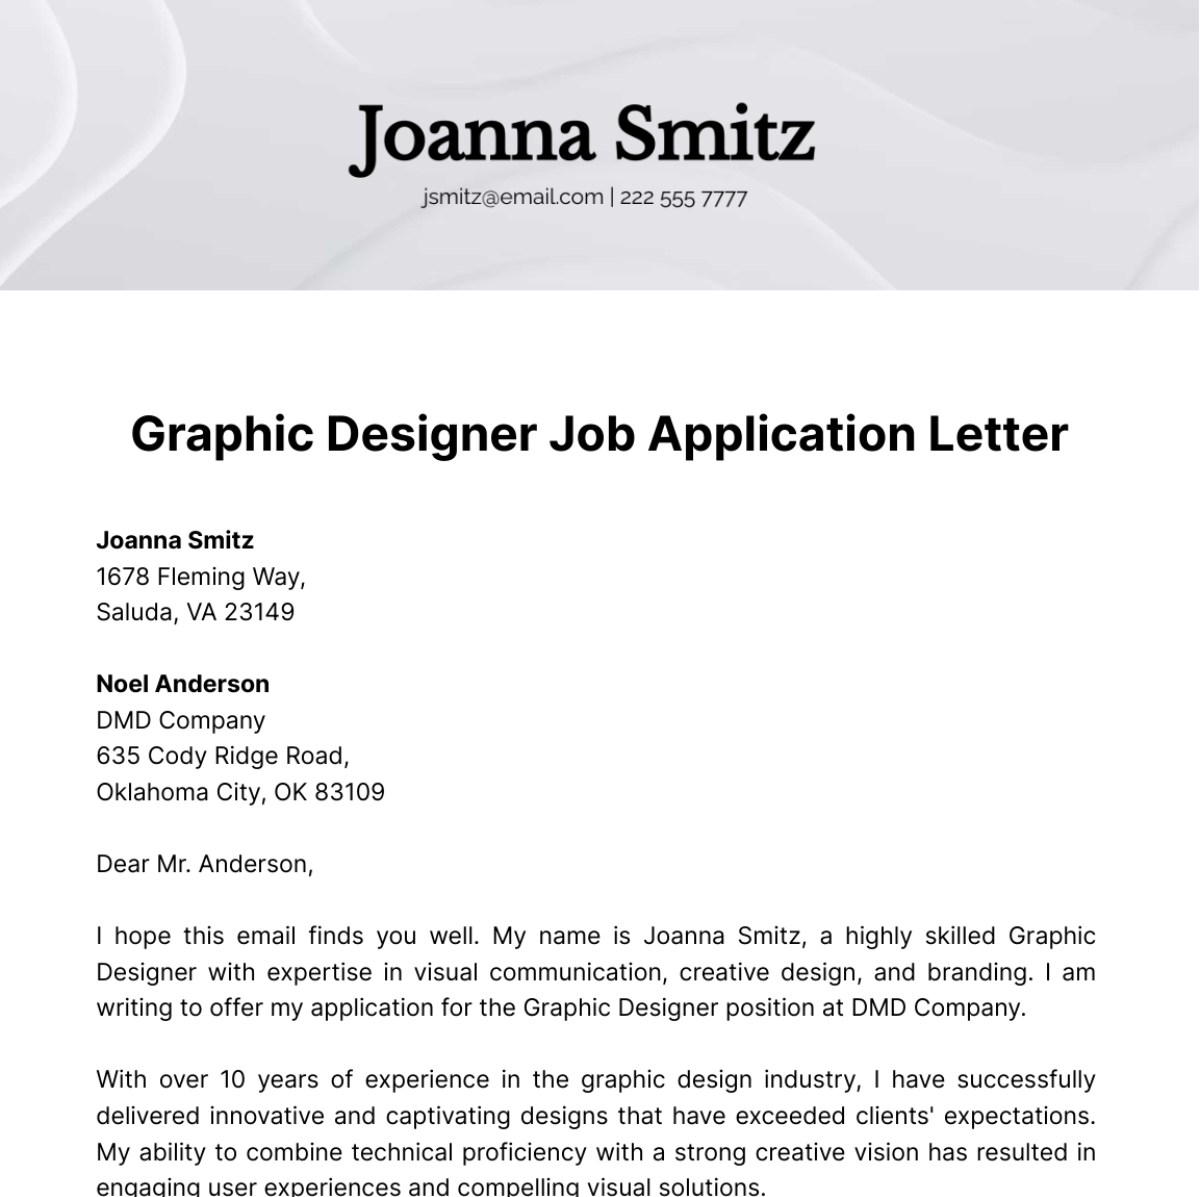 Graphic Designer Job Application Letter  Template